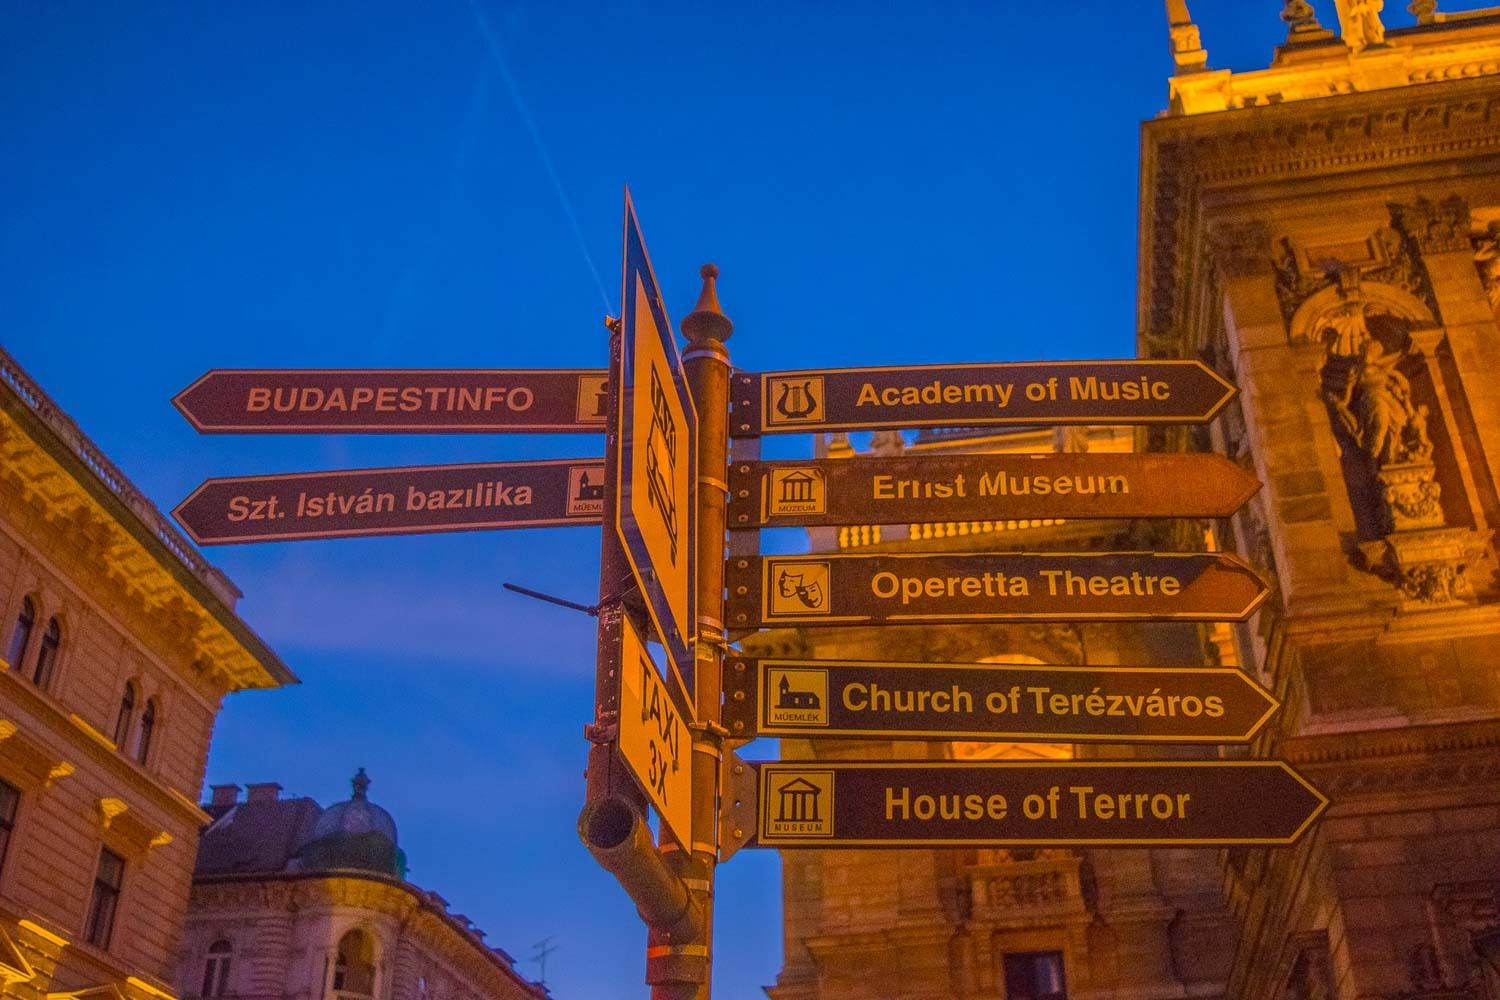 Budapest Nightlife - 2 Days in Budapest Itinerary